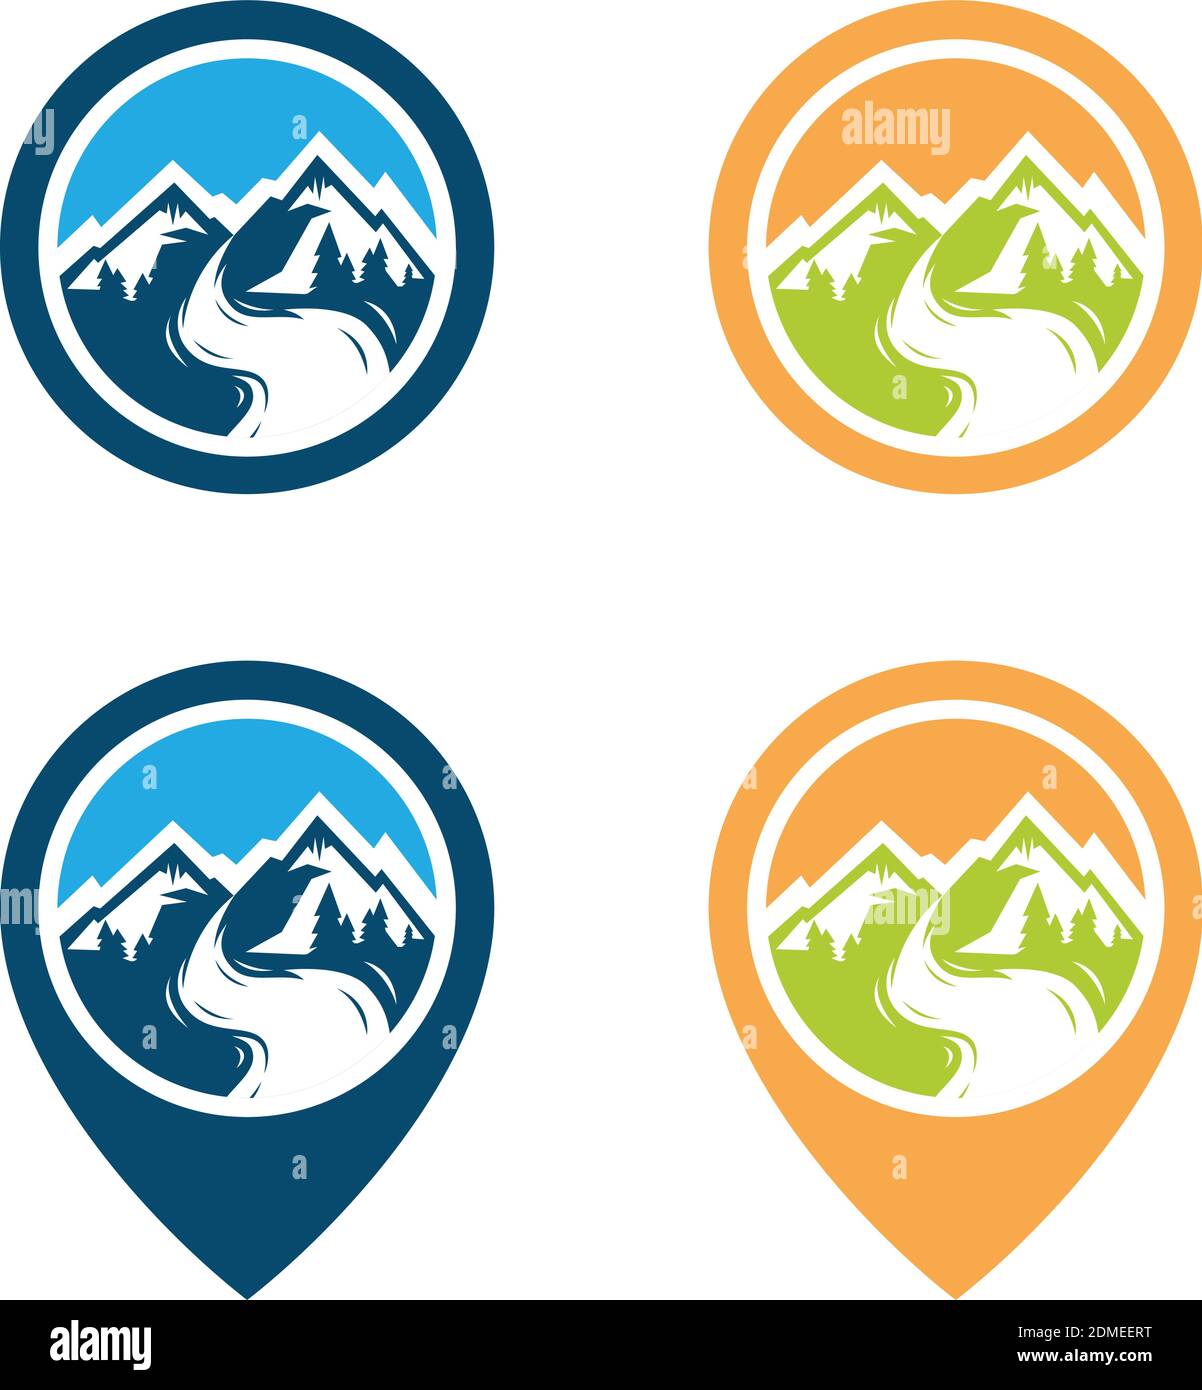 Adventure Mountain Pine Tree Logo. Mountain Rock und Pinien Outdoor Camping Labels. Vektorgrafik, eps8. eps10 Stock Vektor